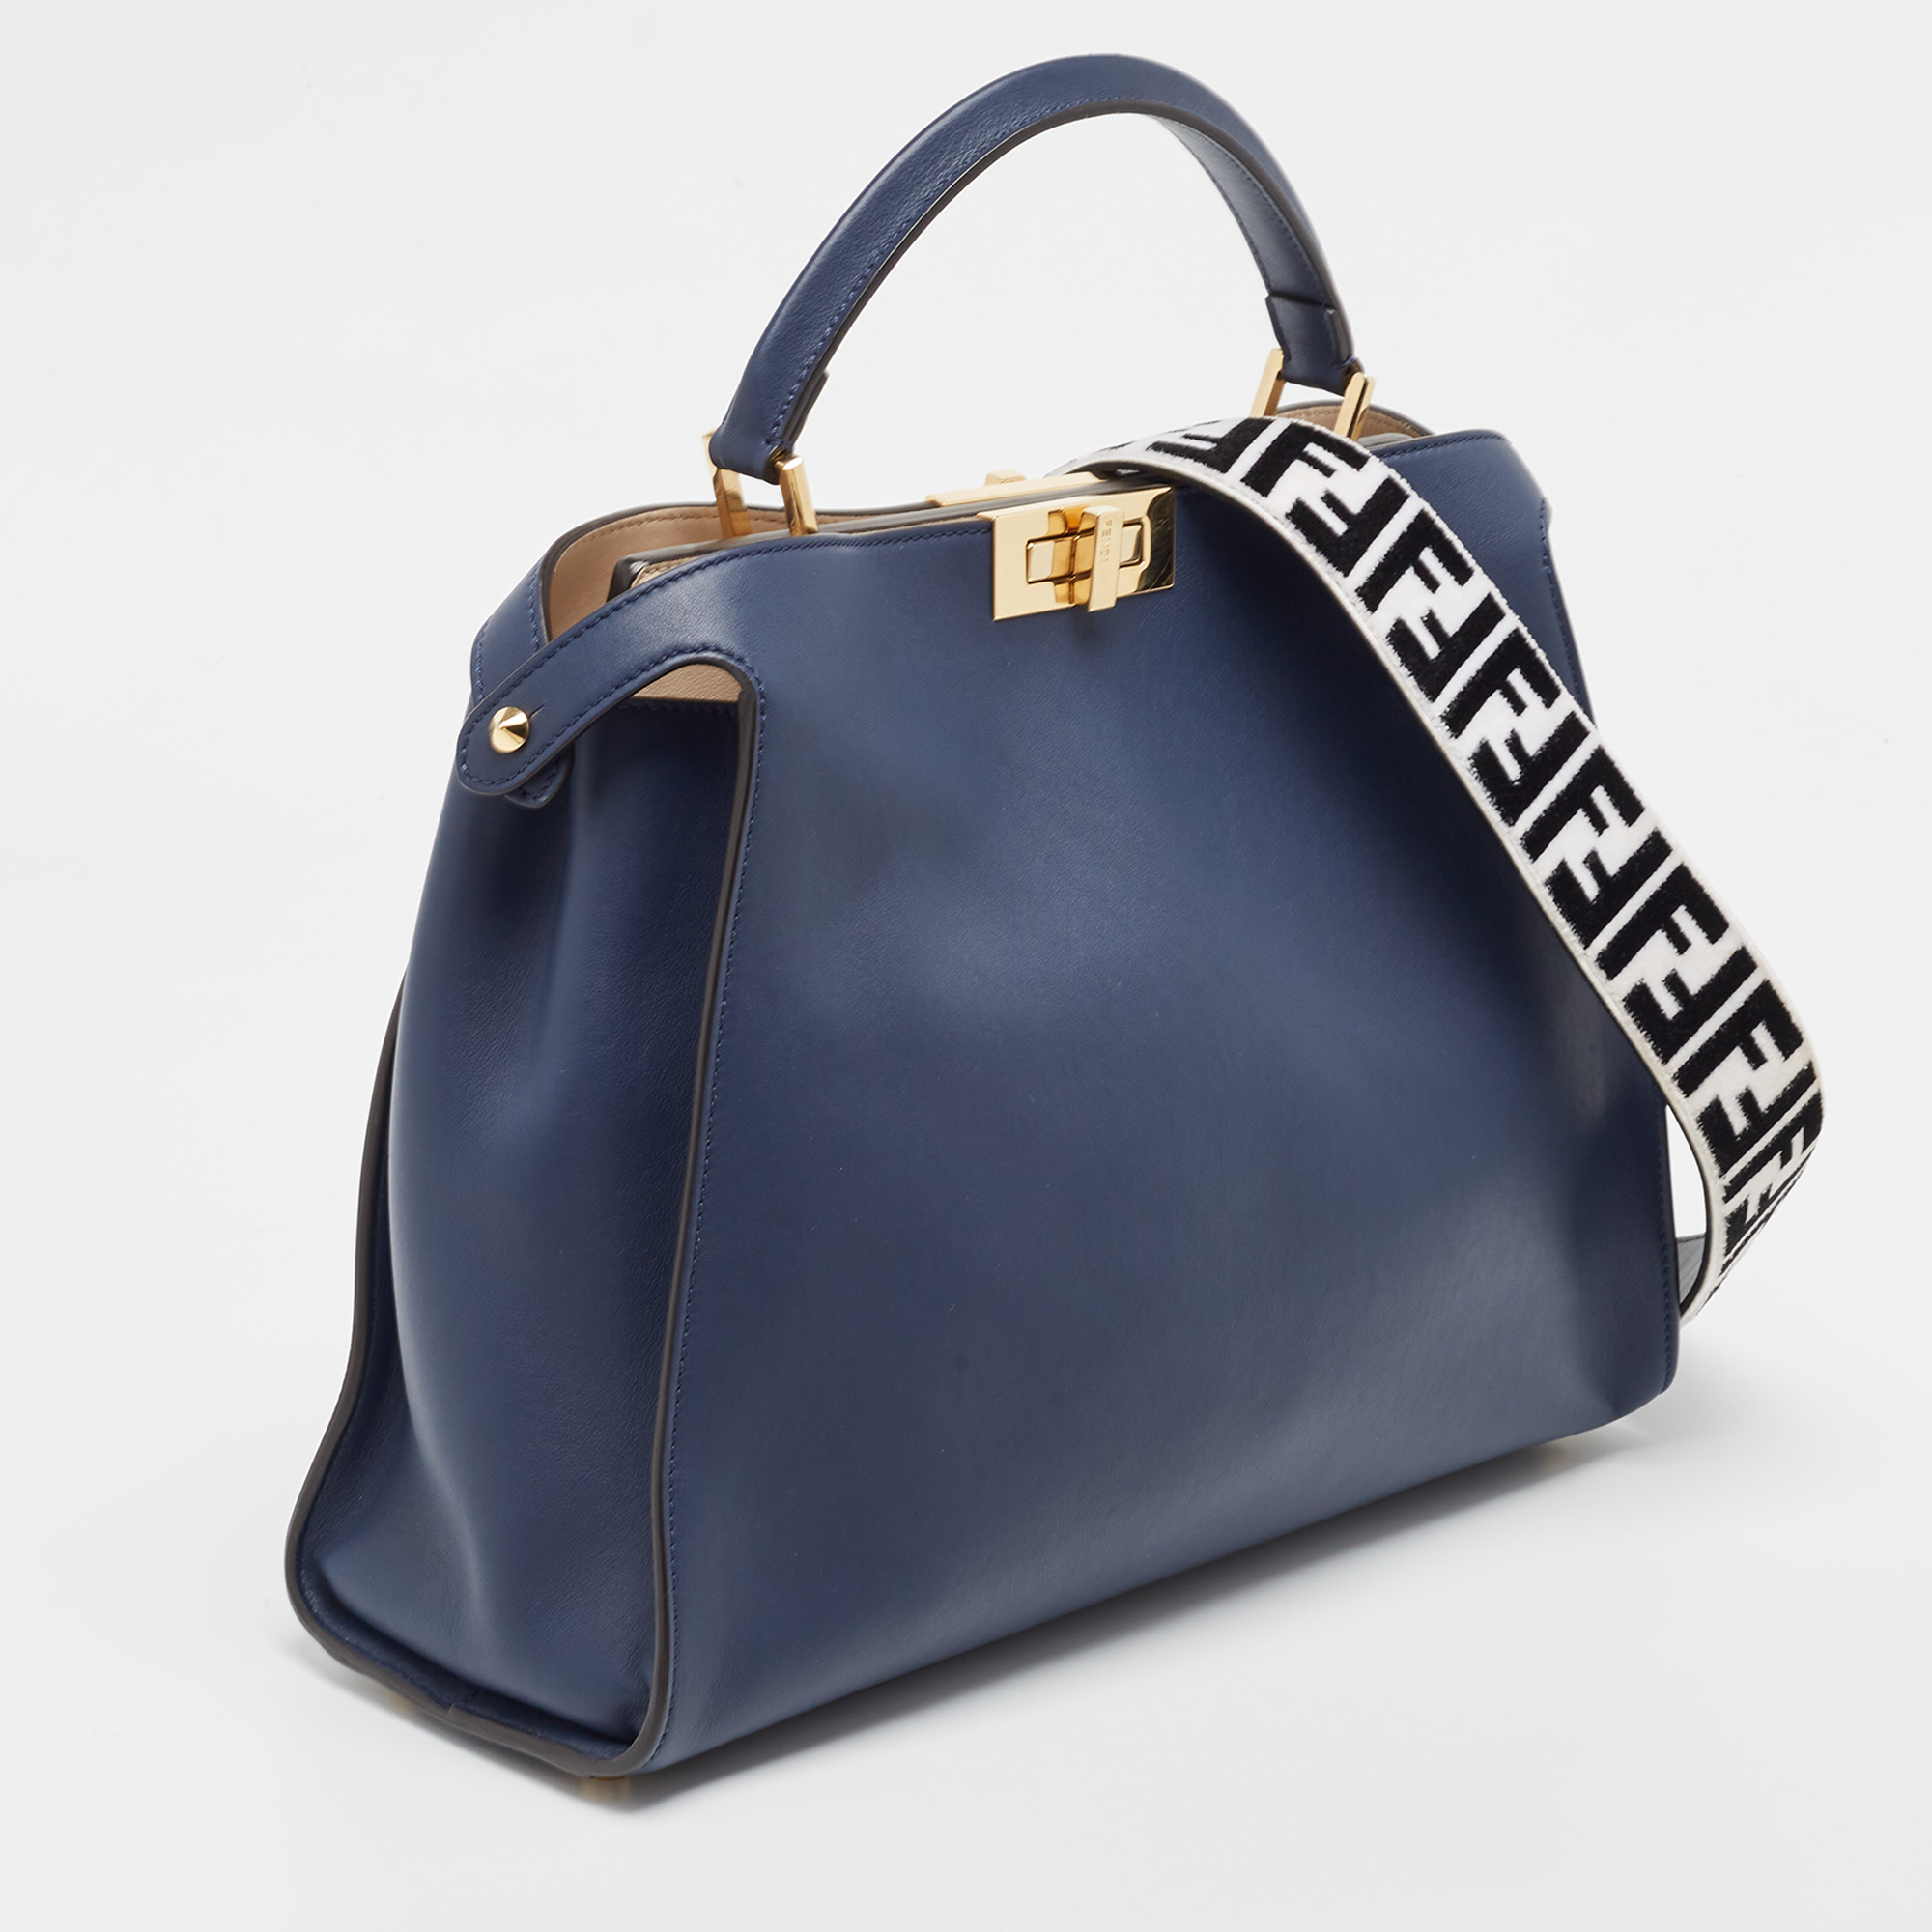 Fendi Blue Leather Large Peekaboo Top Handle Bag